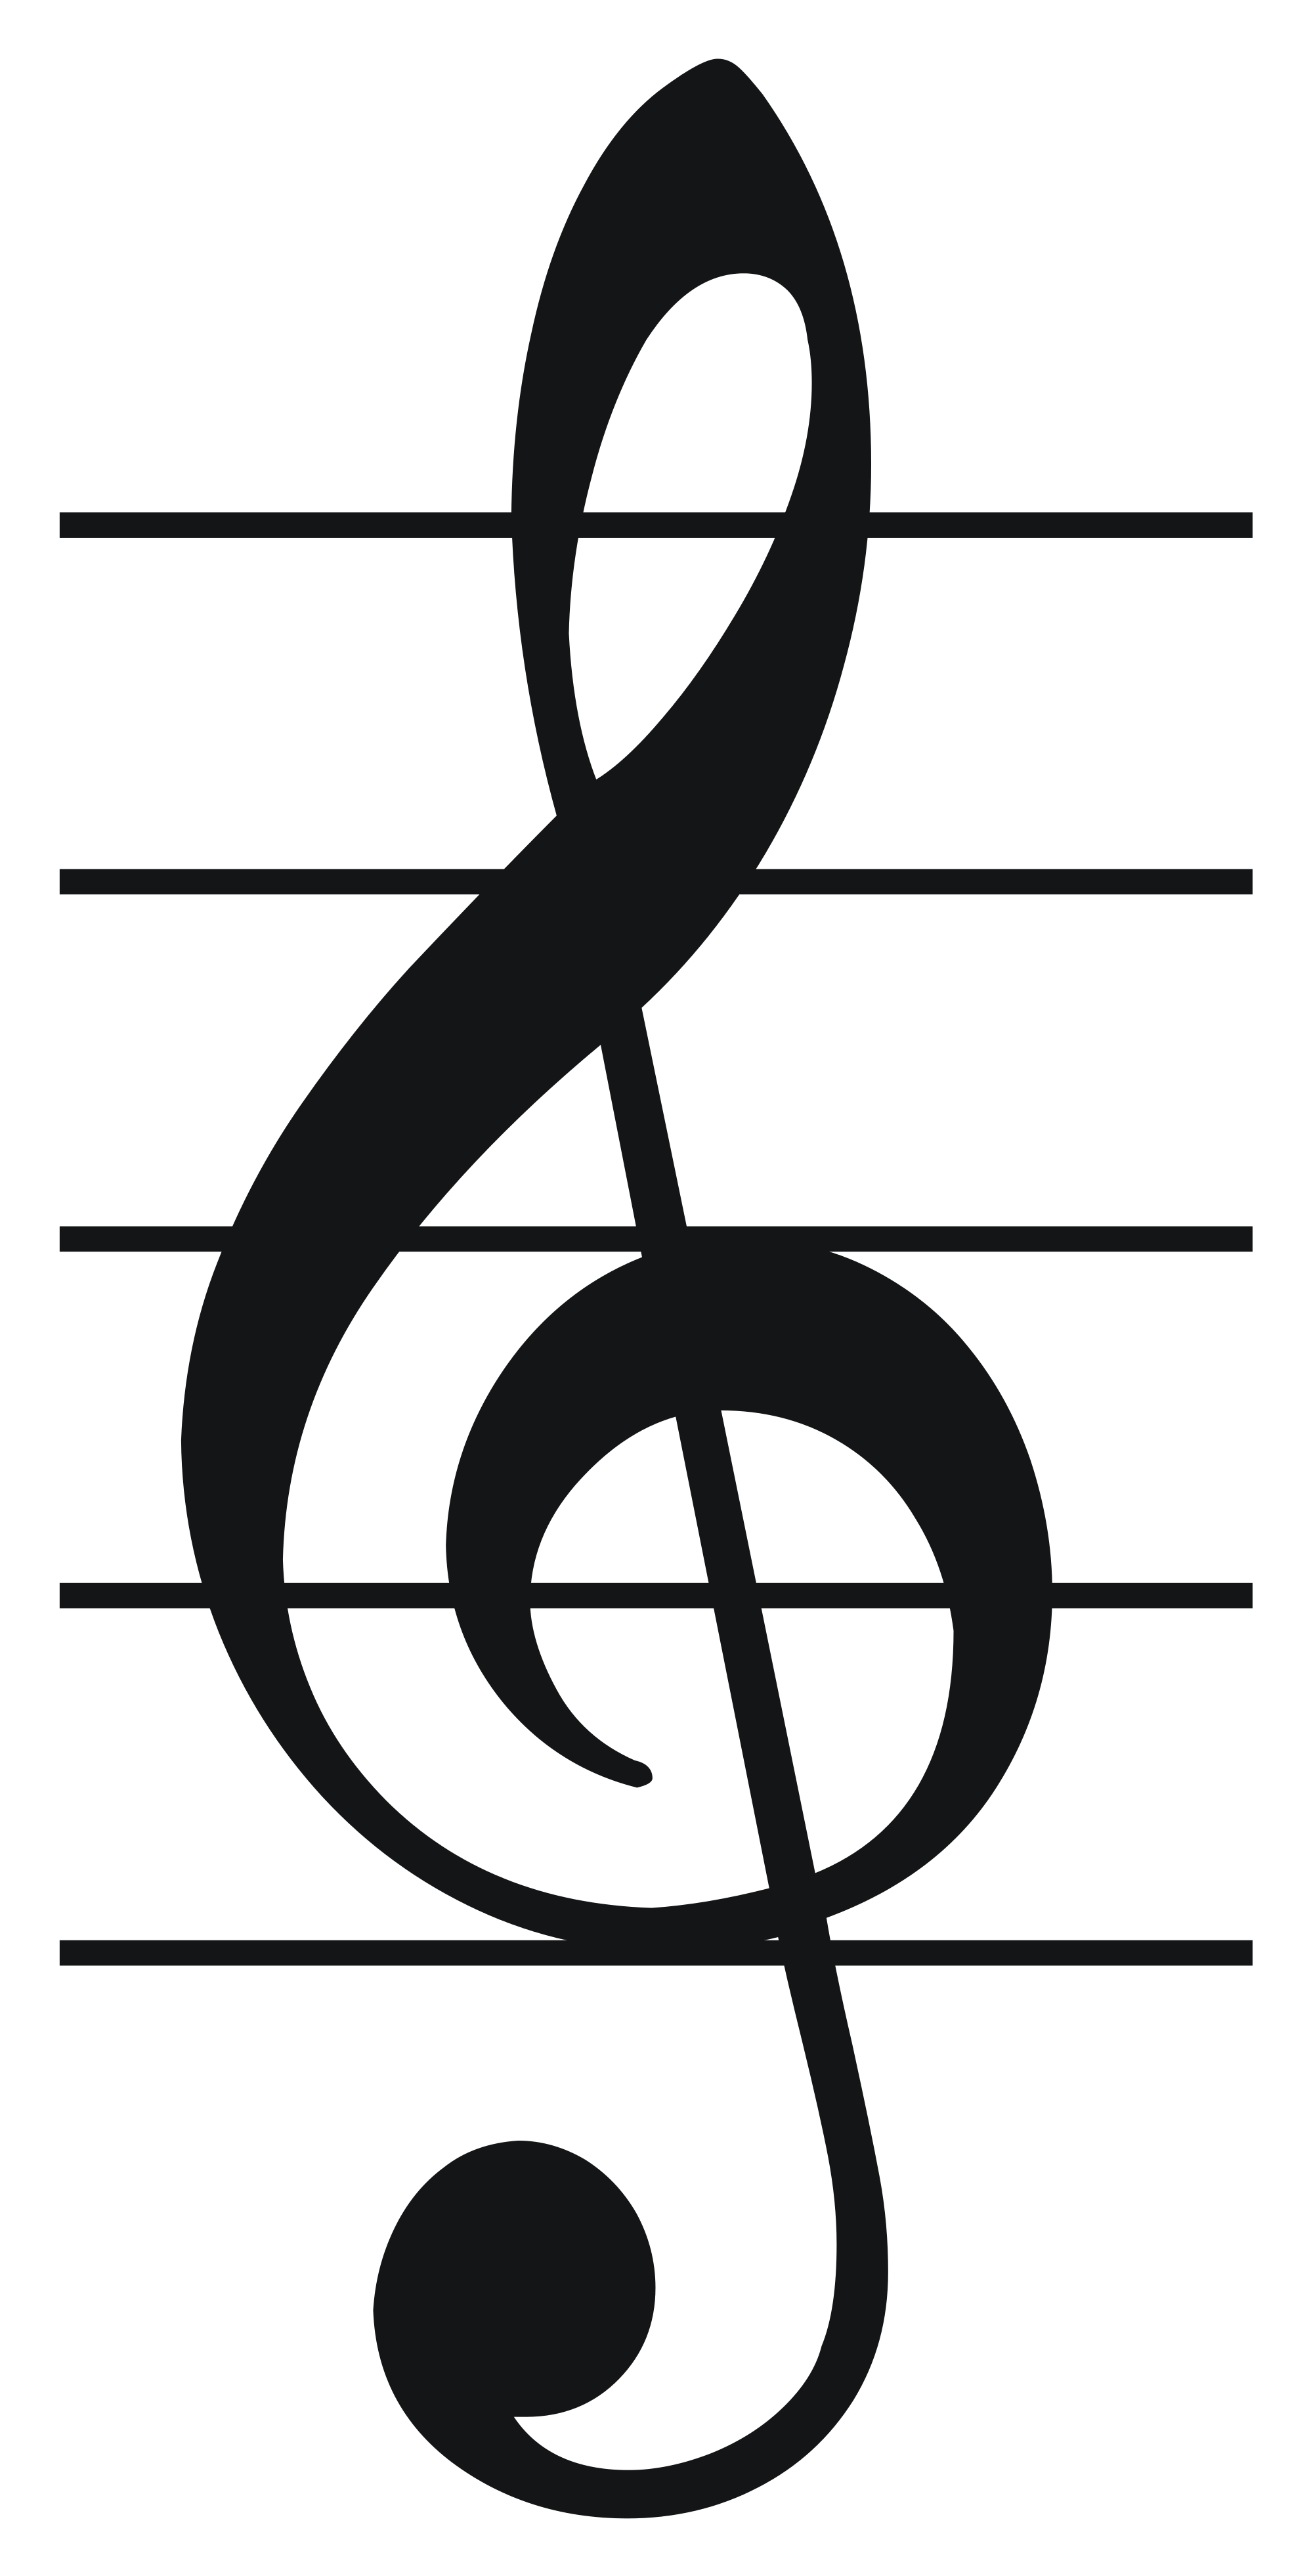 File:Treble clef.svg - Wikimedia Commons